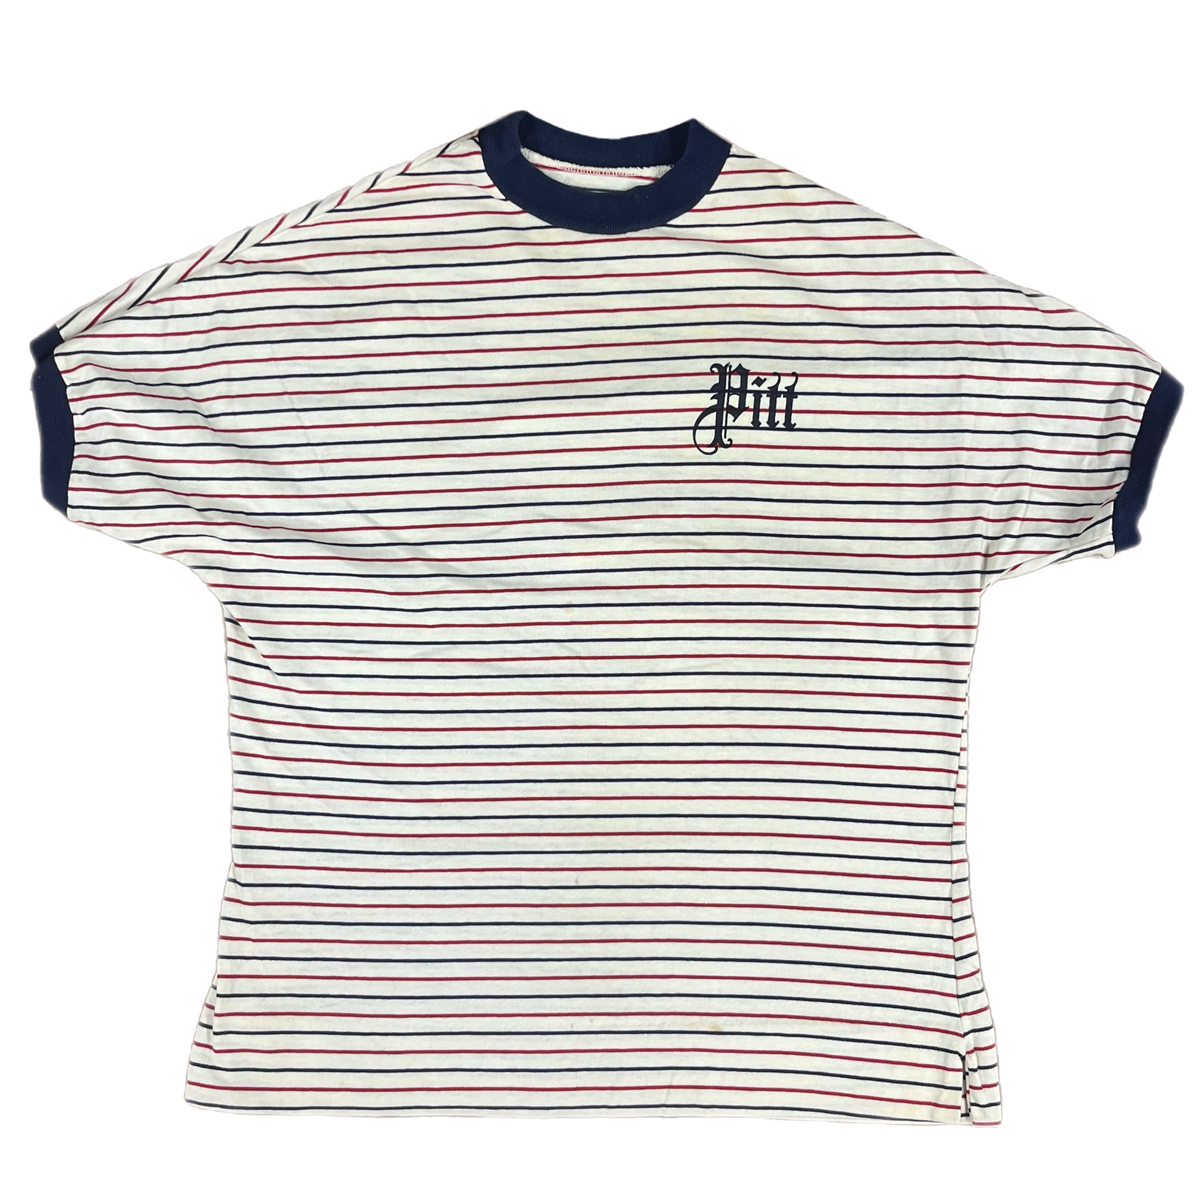 Vintage Pitt Panthers &quot;Collegiate Striped&quot; Knit Shirt